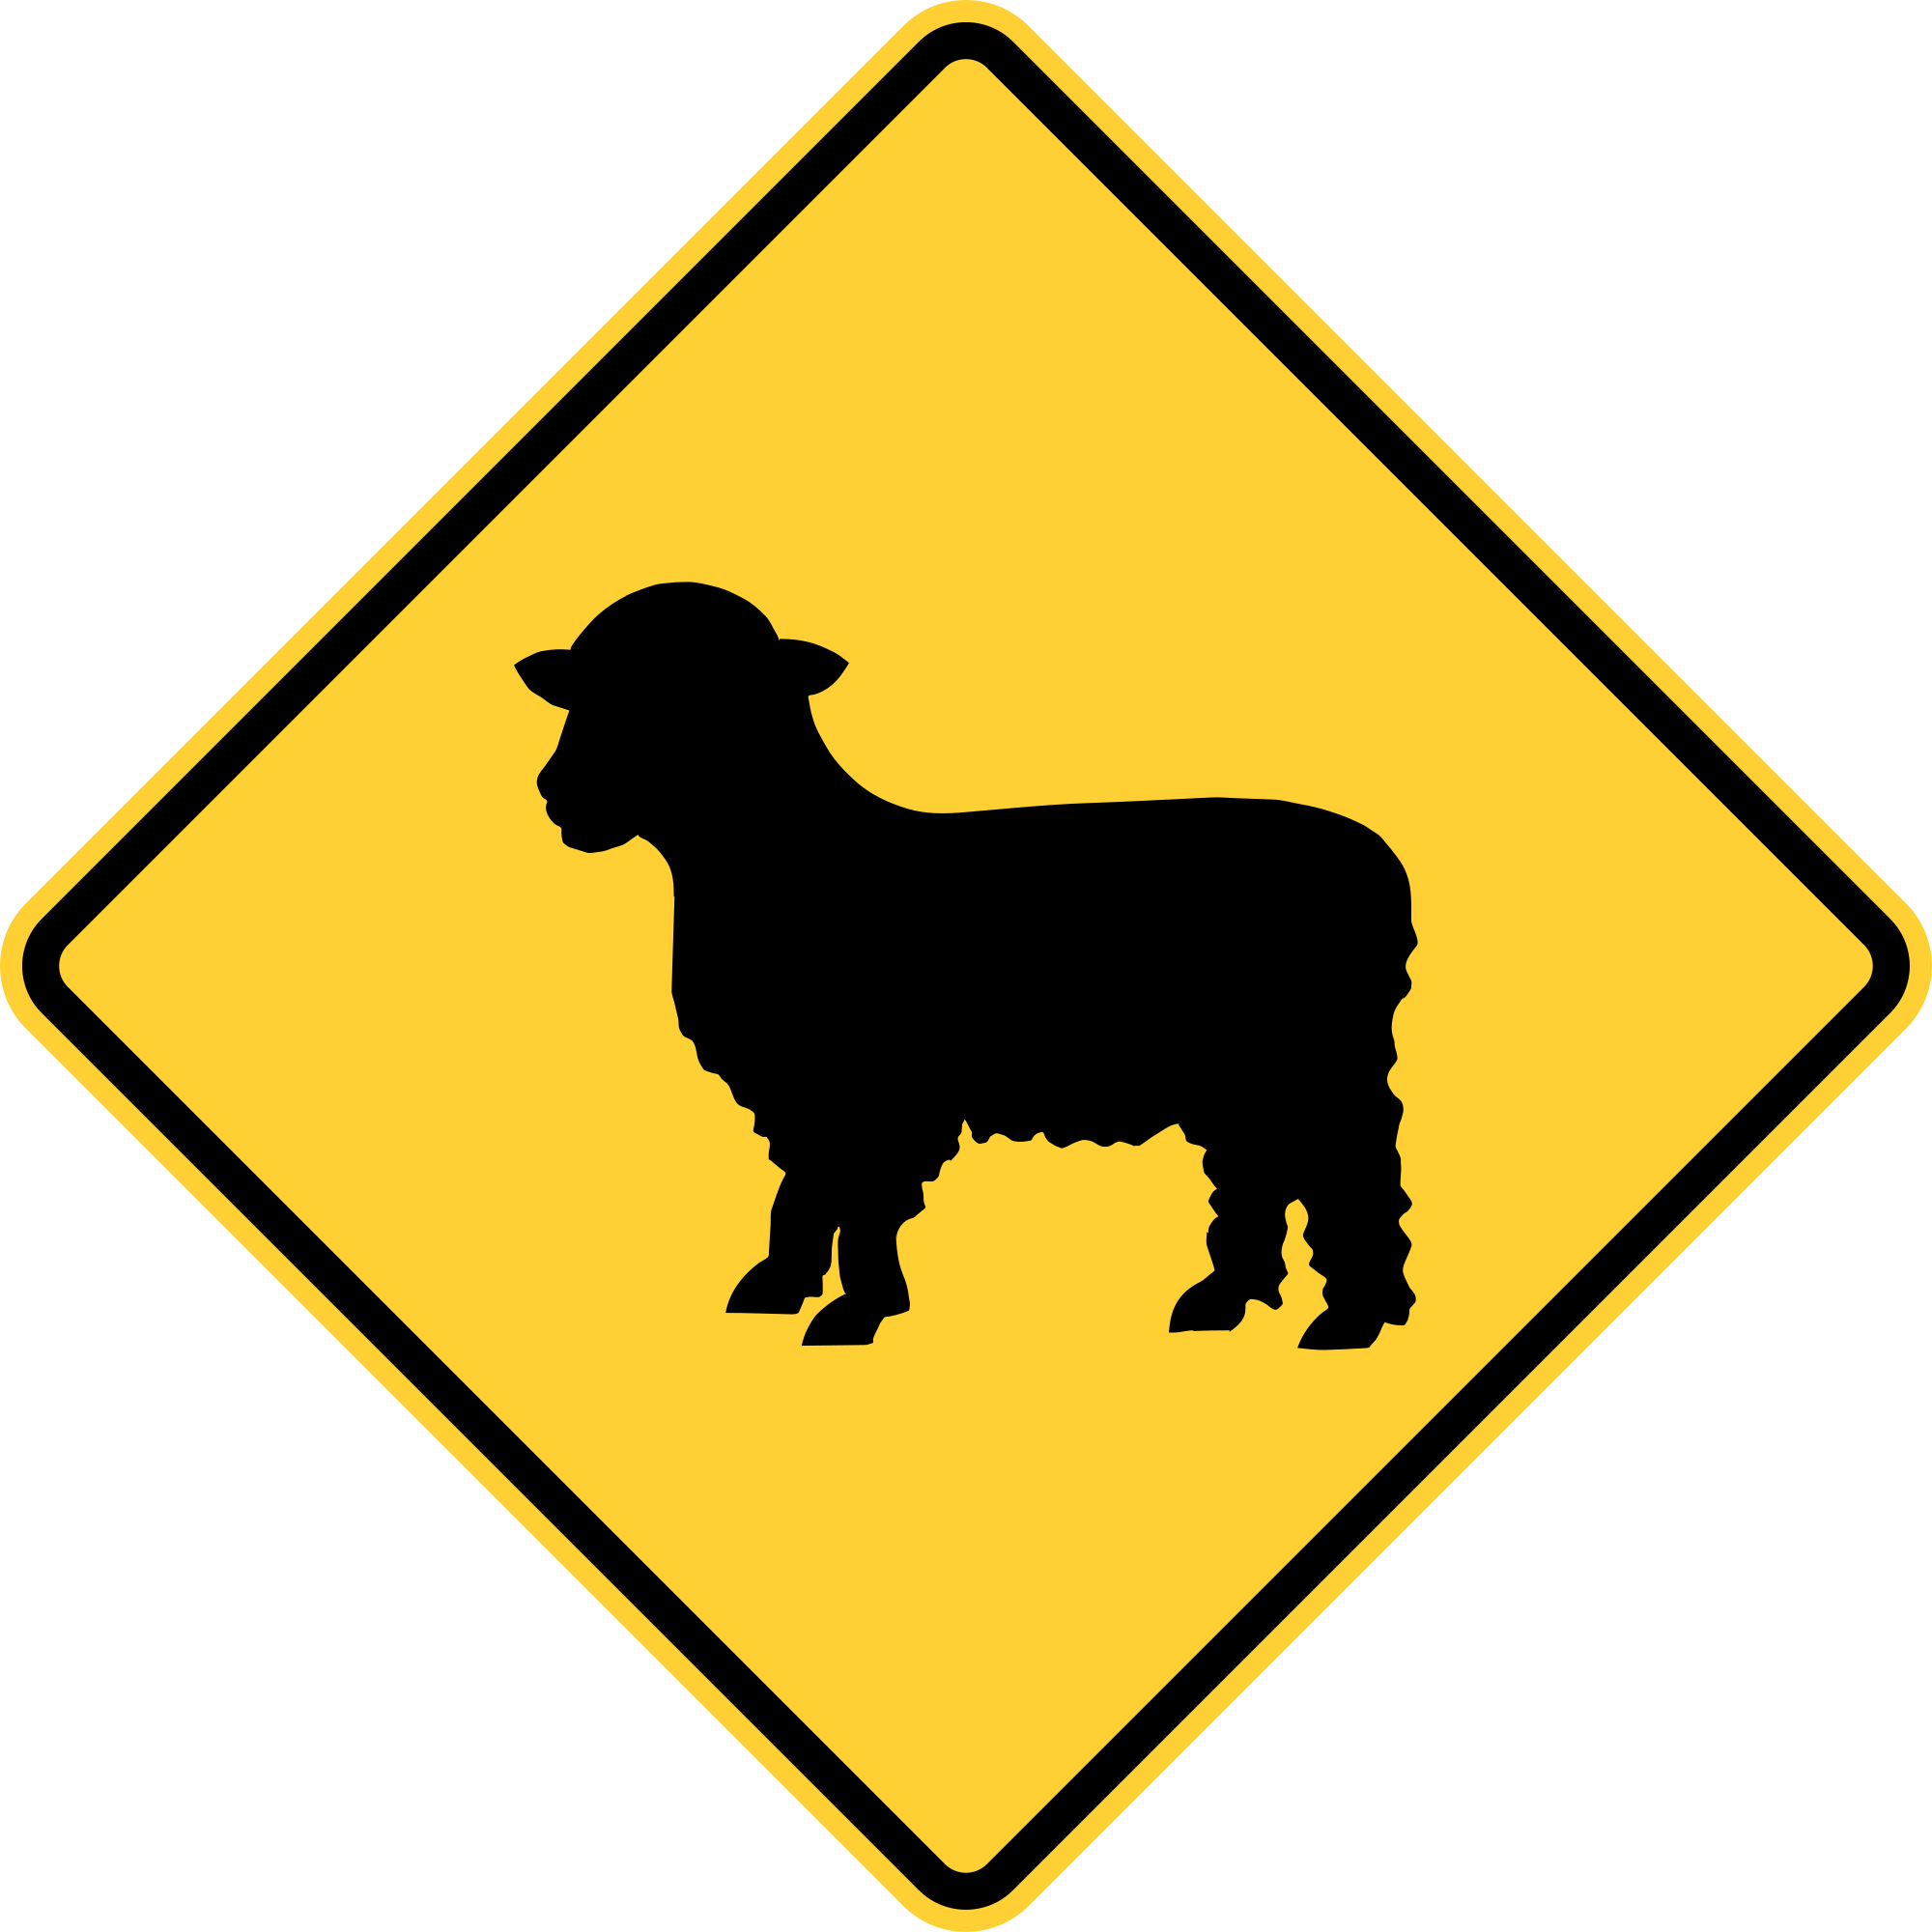 Open - Australian Road Signs Png (2000x2000)